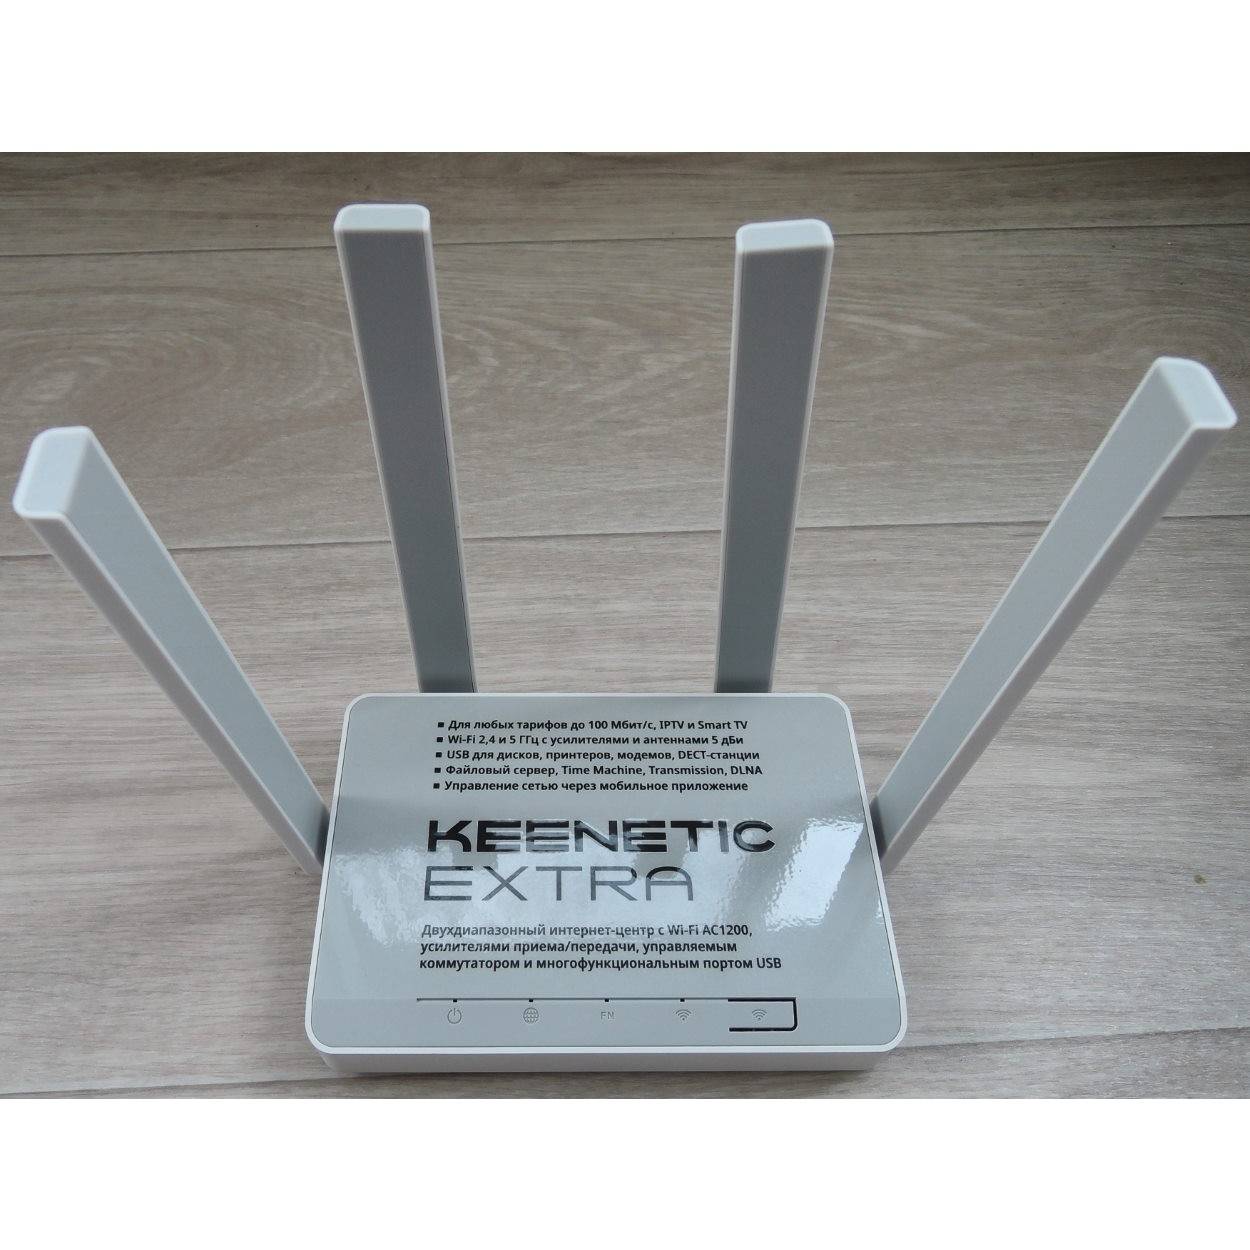 Keenetic extra kn-1710: настройка, обзор и характеристики беспроводного wi-fi роутера